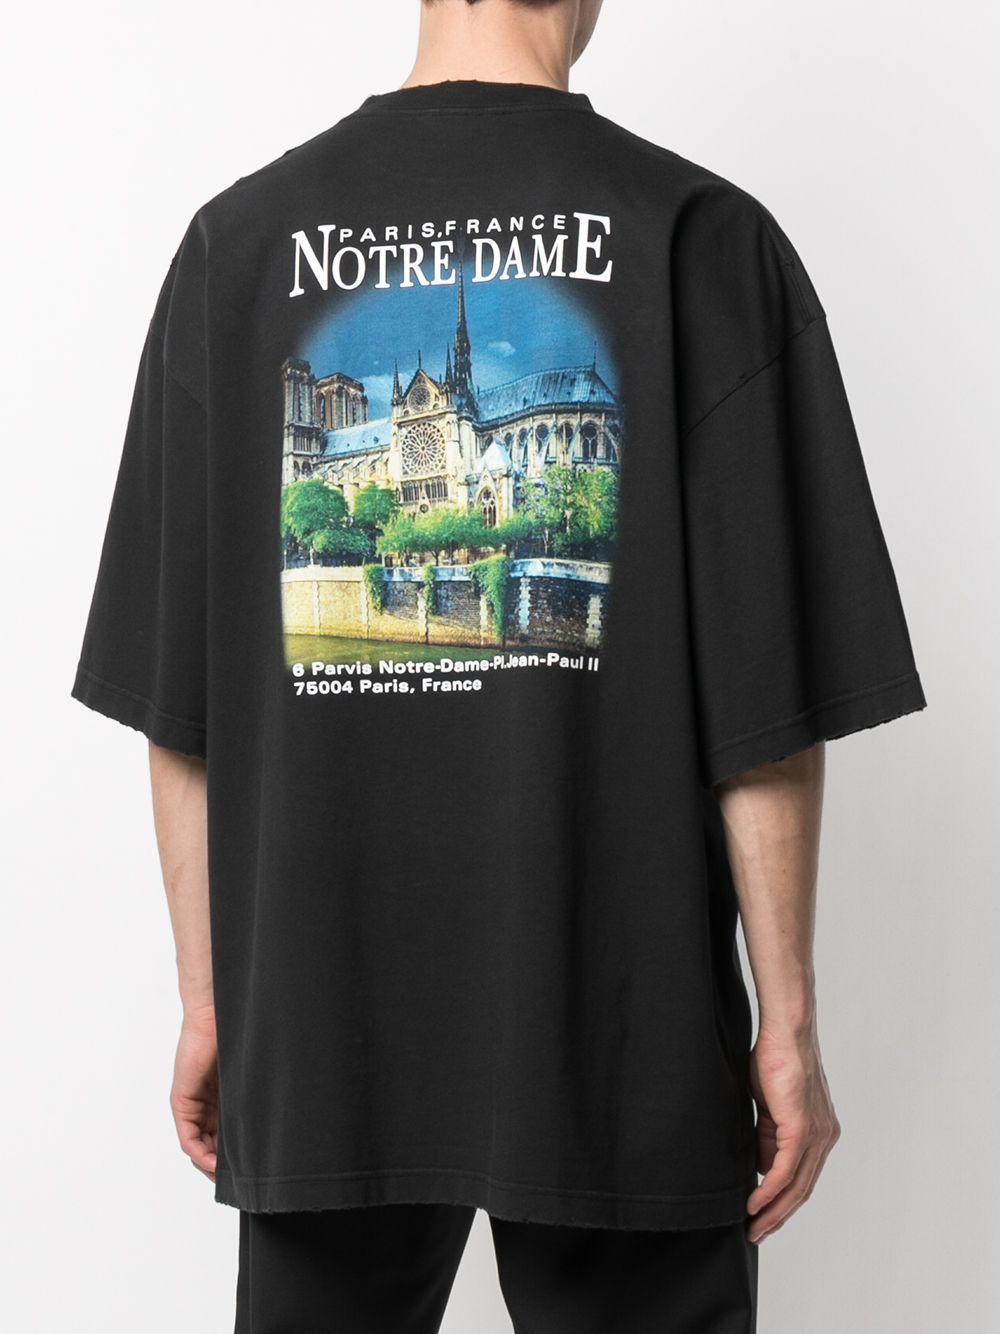 Balenciaga Cotton Sacre De Coeur Print T-shirt in Black for Men - Save 49%  - Lyst